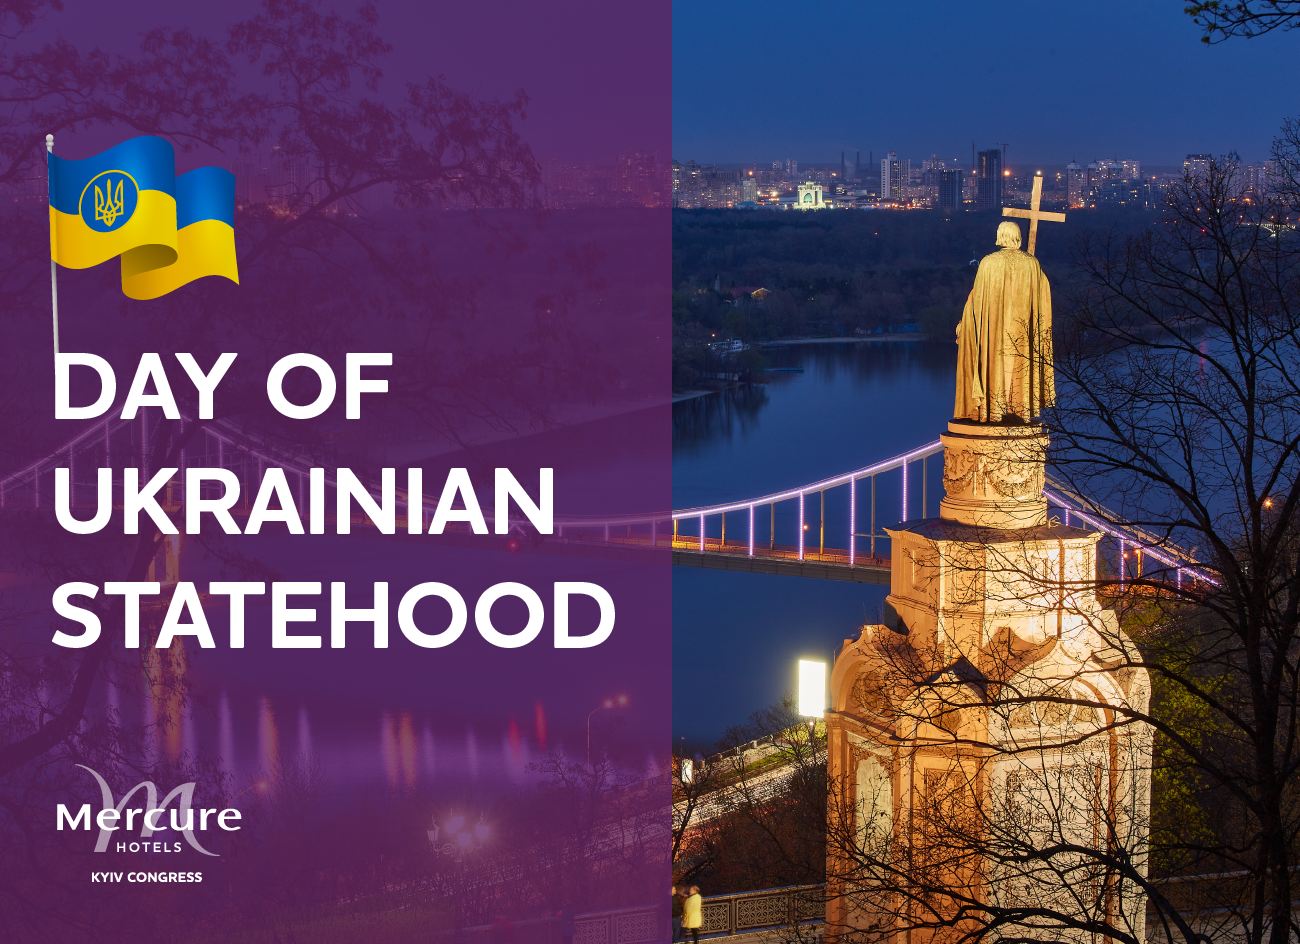 Happy Day of Ukrainian Statehood!